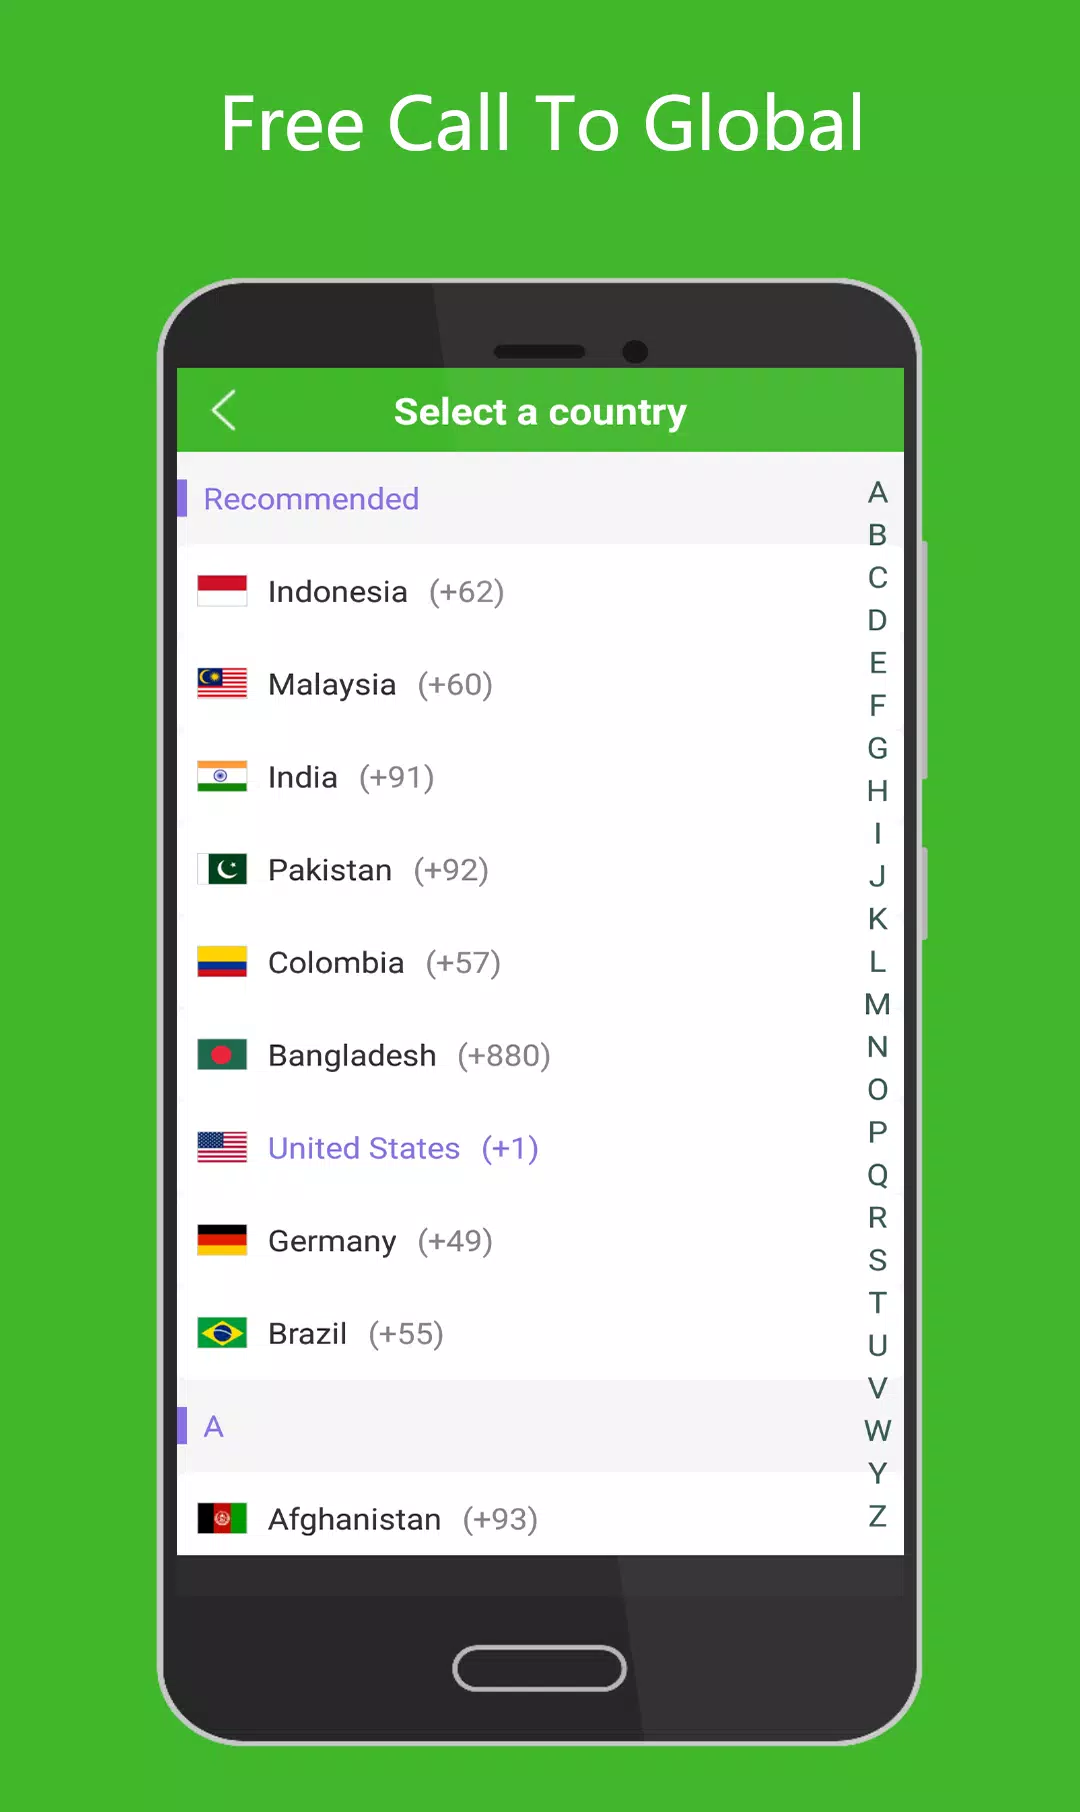 OneTap - Play Games Instantly APK (Android App) - Baixar Grátis